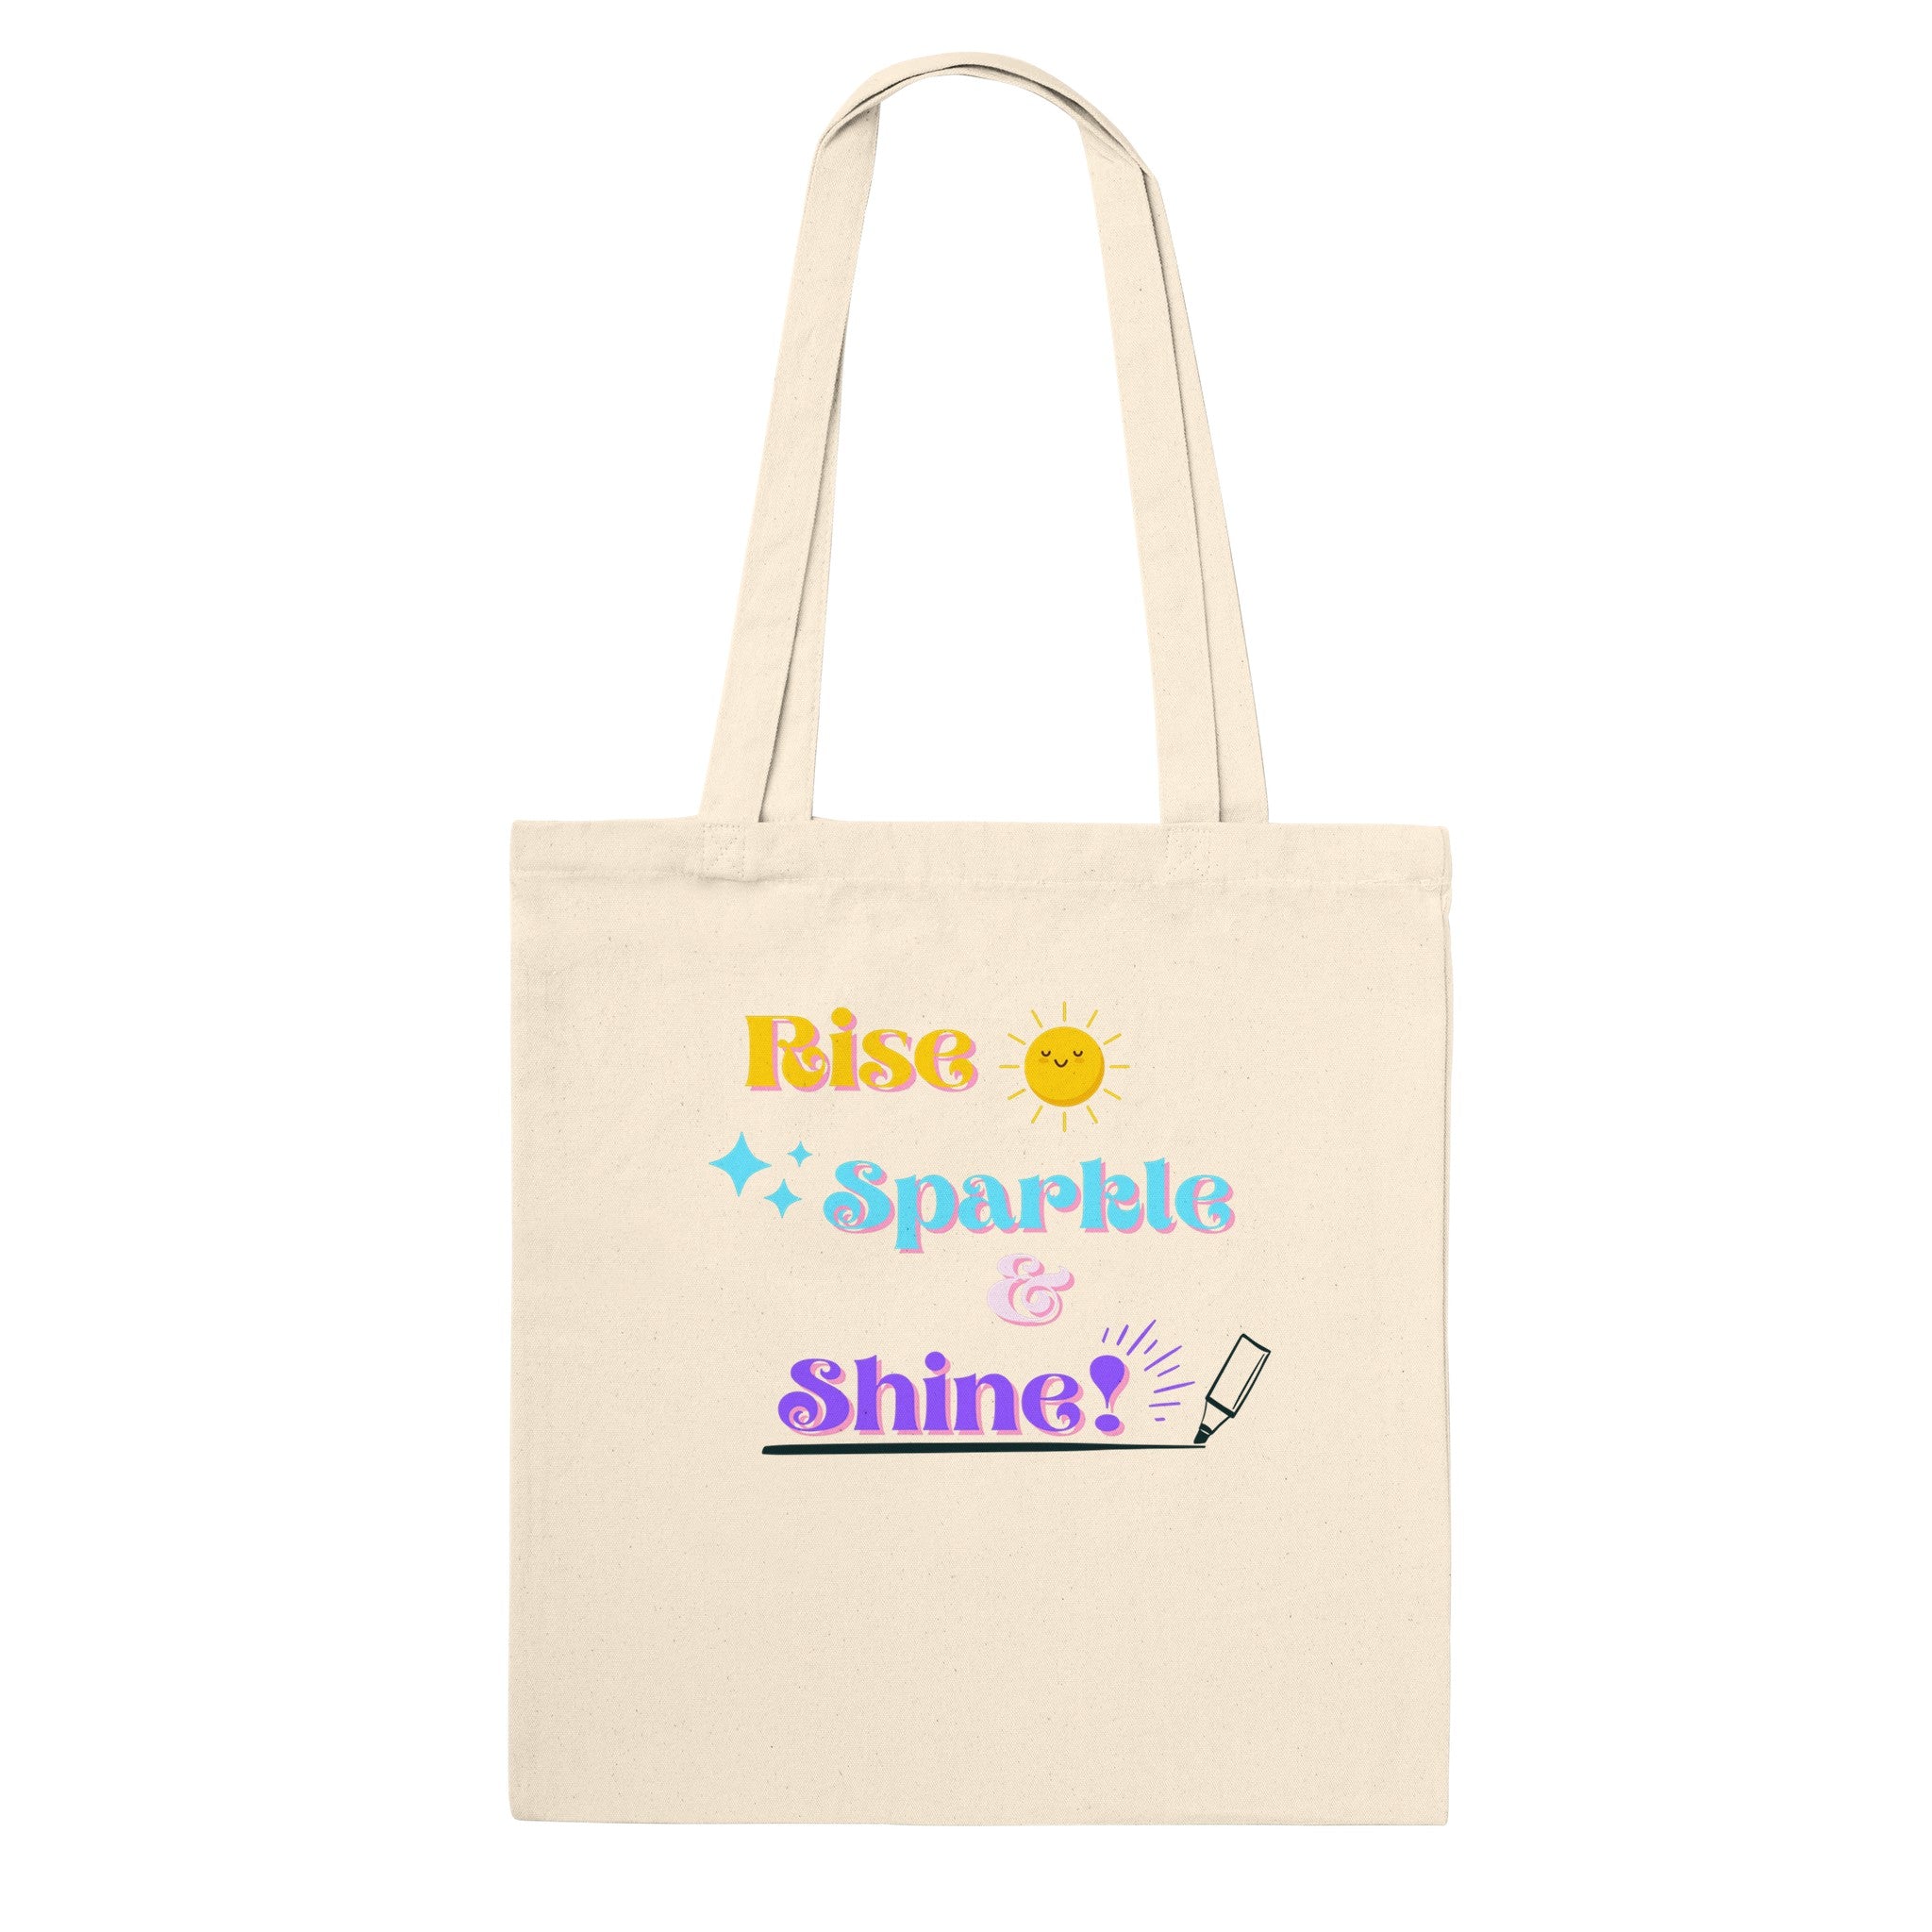 Rise, Sparkle & Shine - Classic Tote Bag